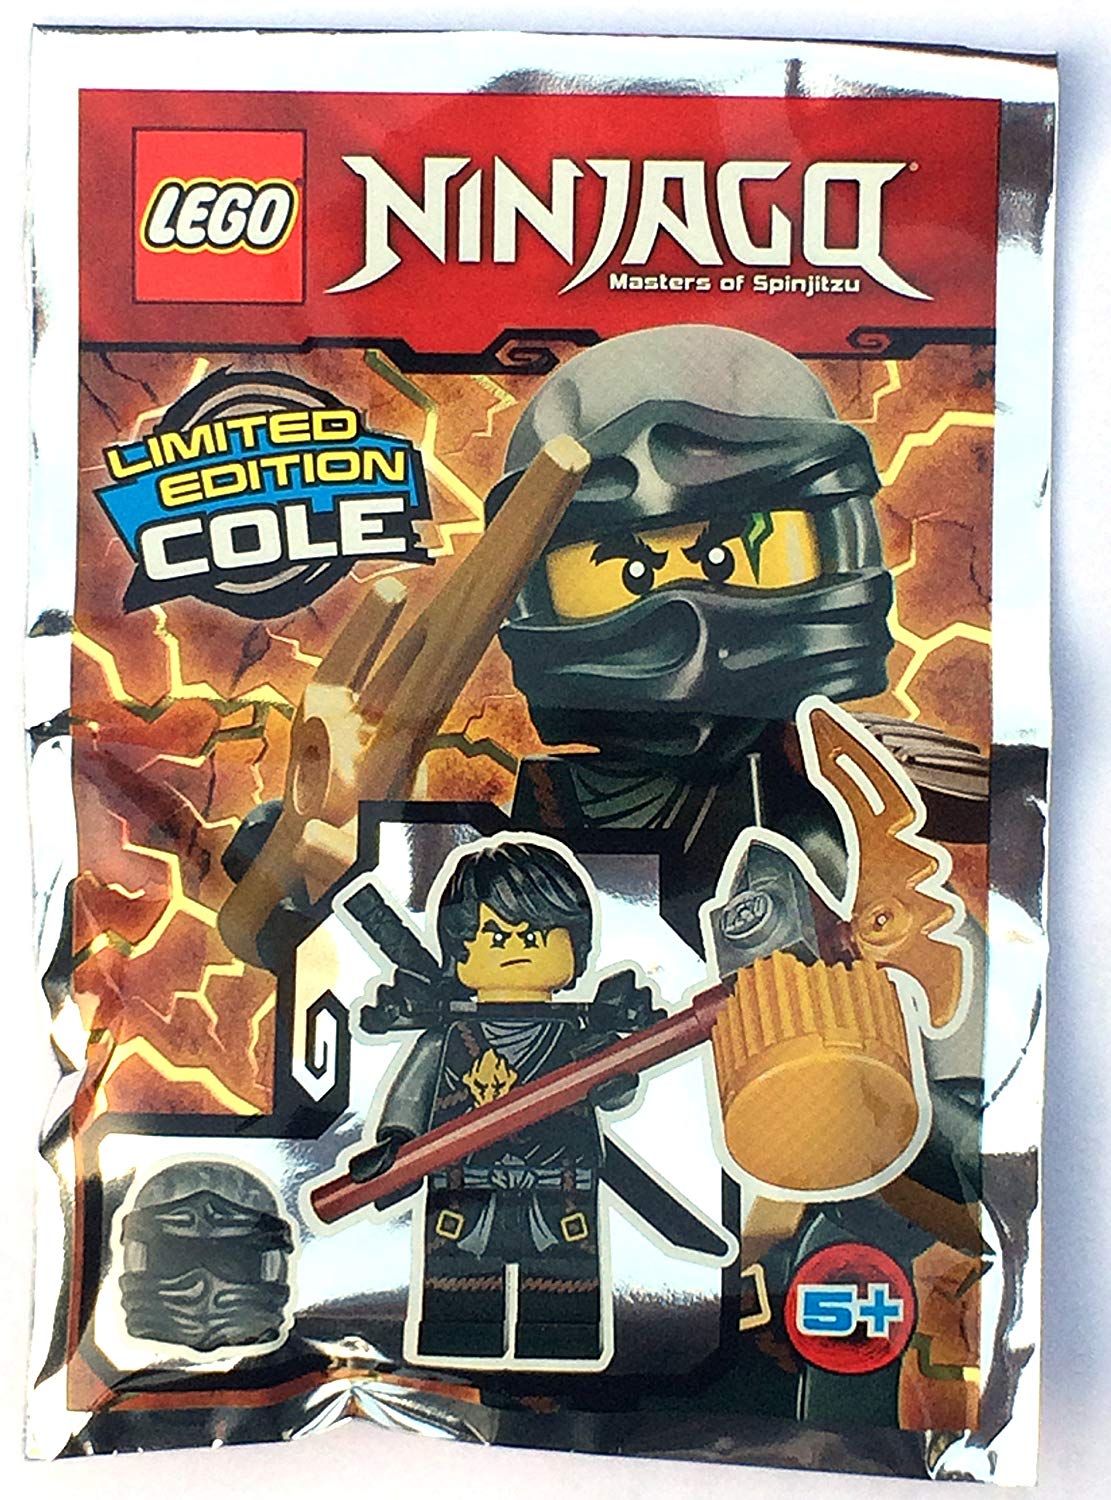 Ninjago Lego 891722 Cole – Limited Edition